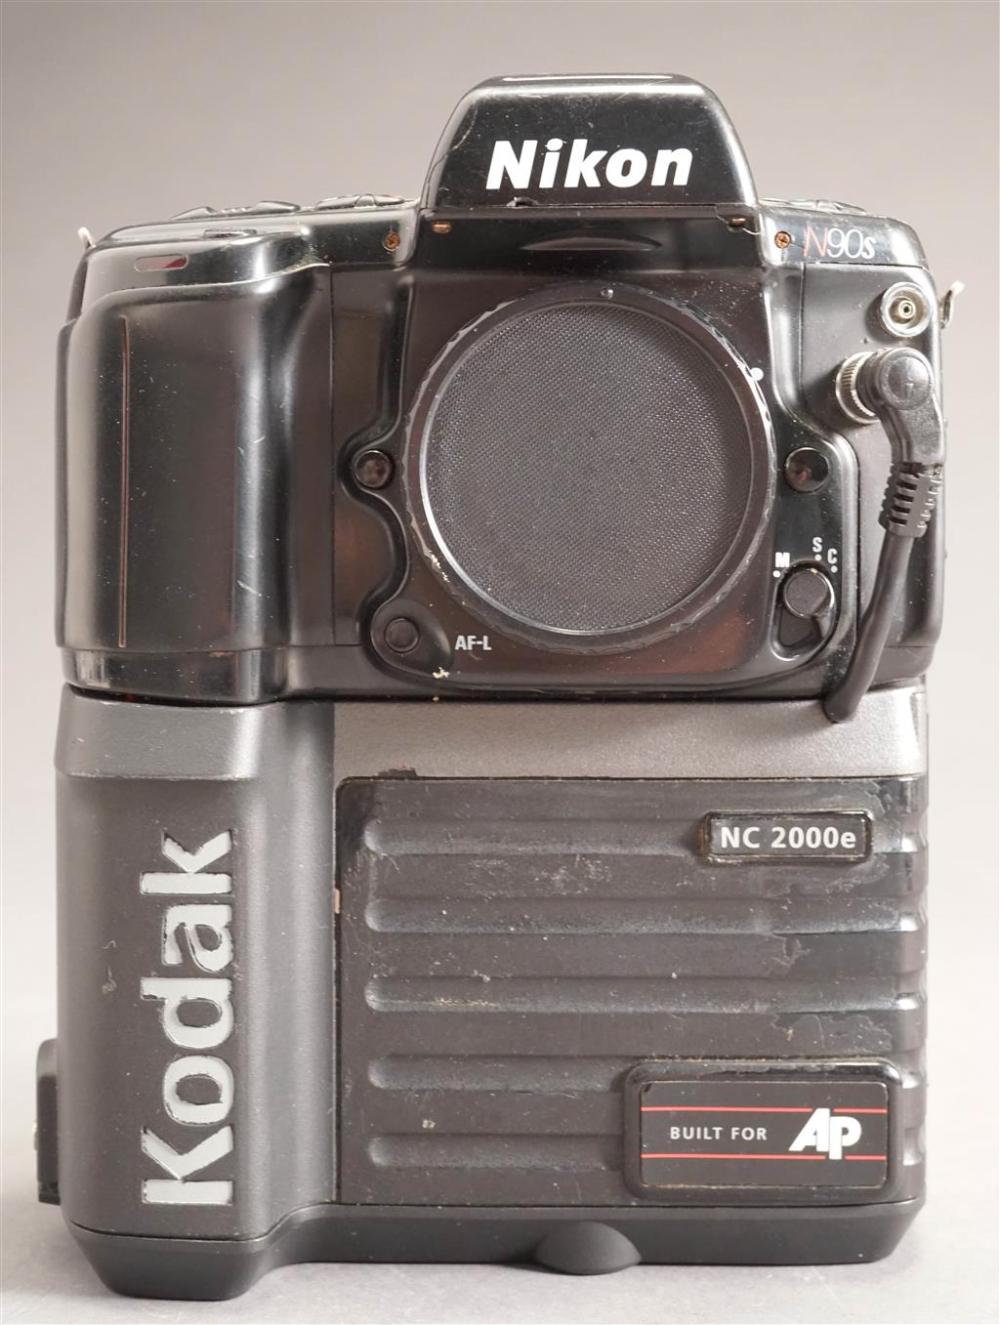 NIKON N90S WITH KODAK NC2000E DIGITAL